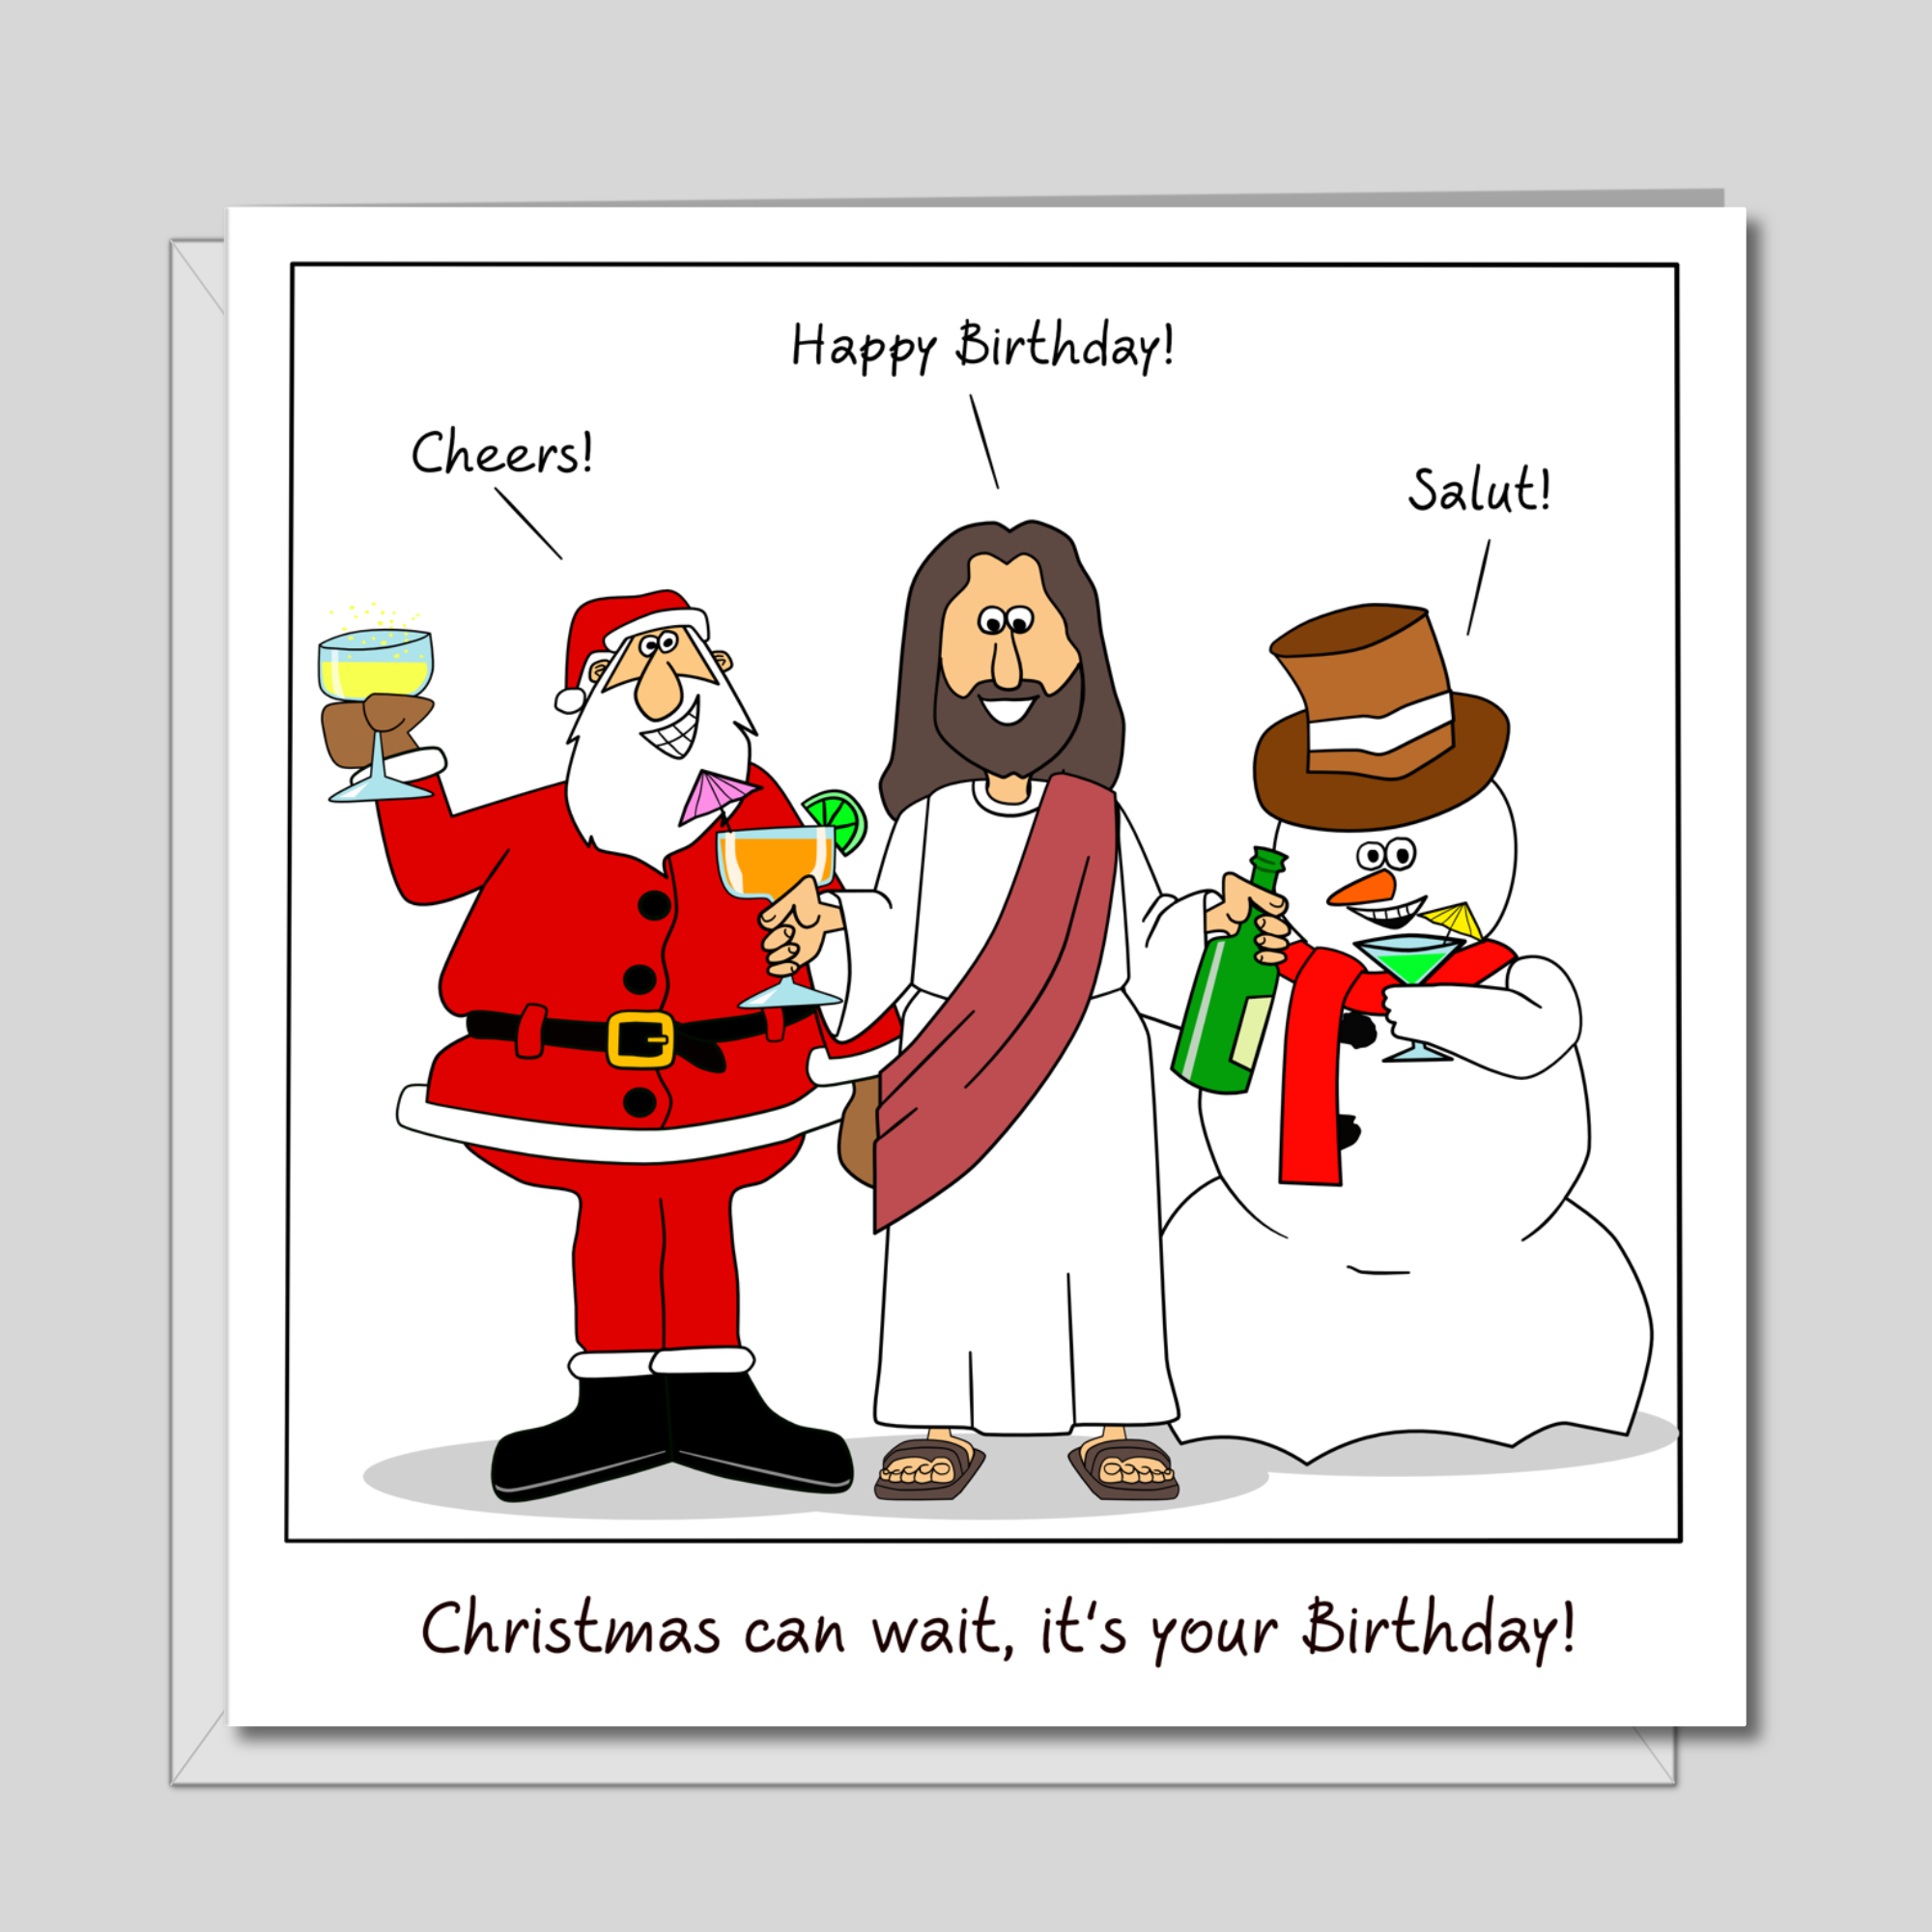 December Birthday Card - Combined Christmas Jesus Santa Claus -  Funny, Humorous and Amusing Cartoon